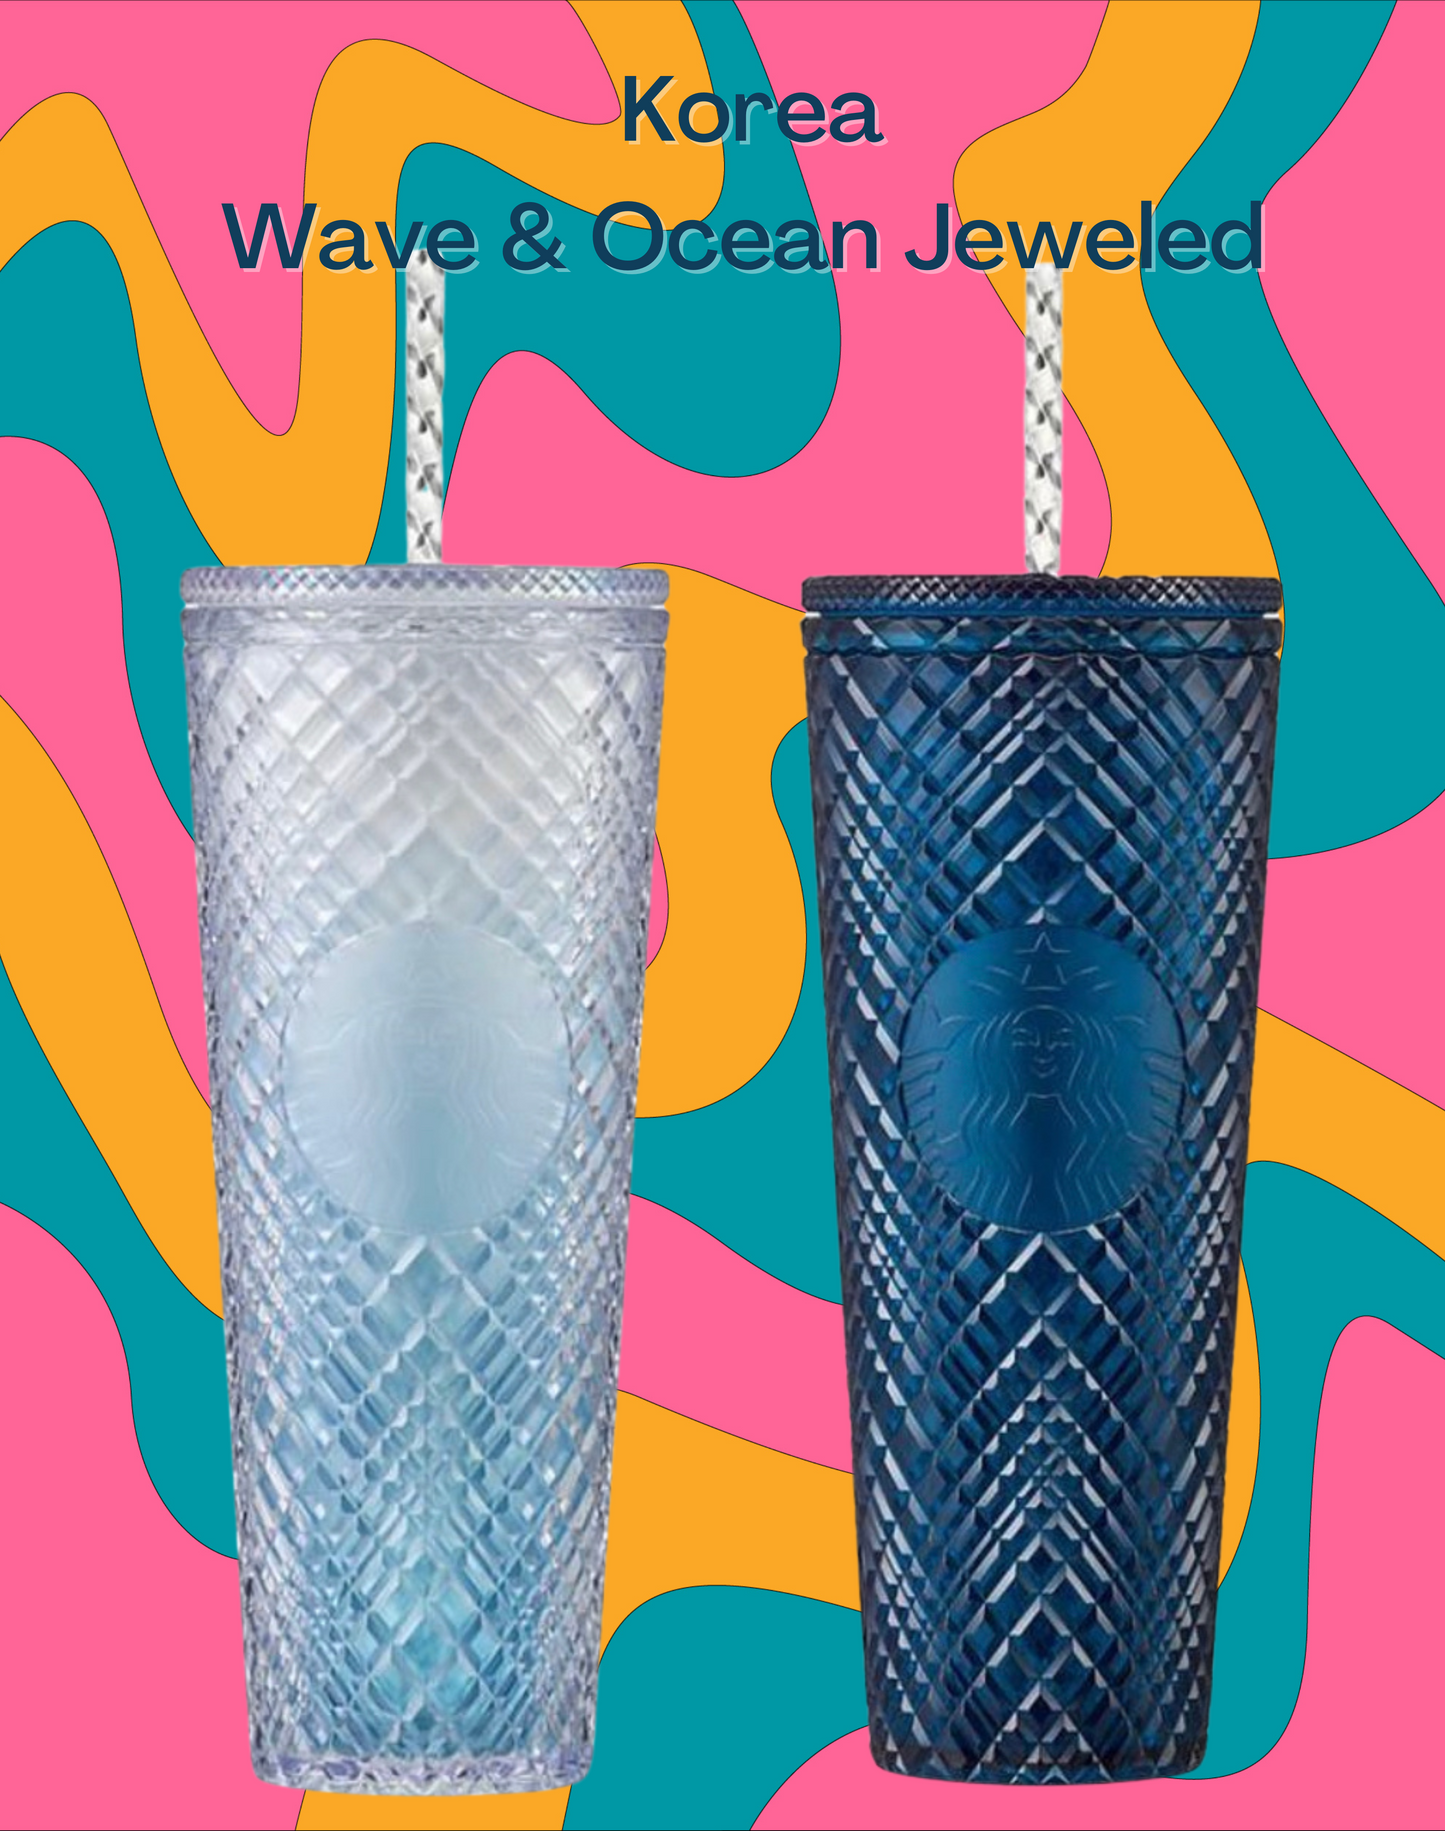 Ocean & Wave Jeweled - Korea